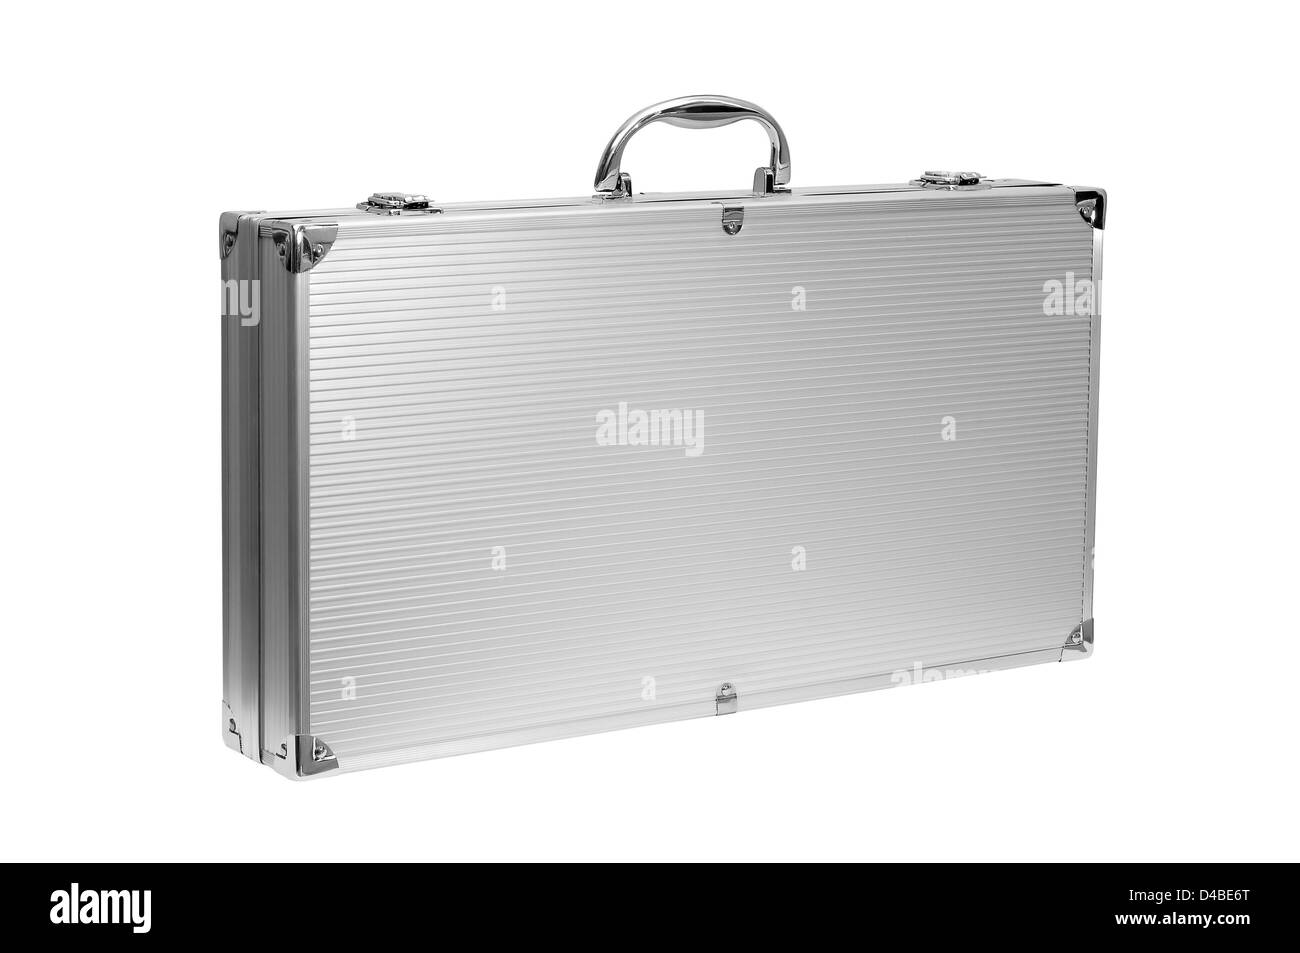 La maleta de metal es fotografiado sobre un fondo blanco. Foto de stock